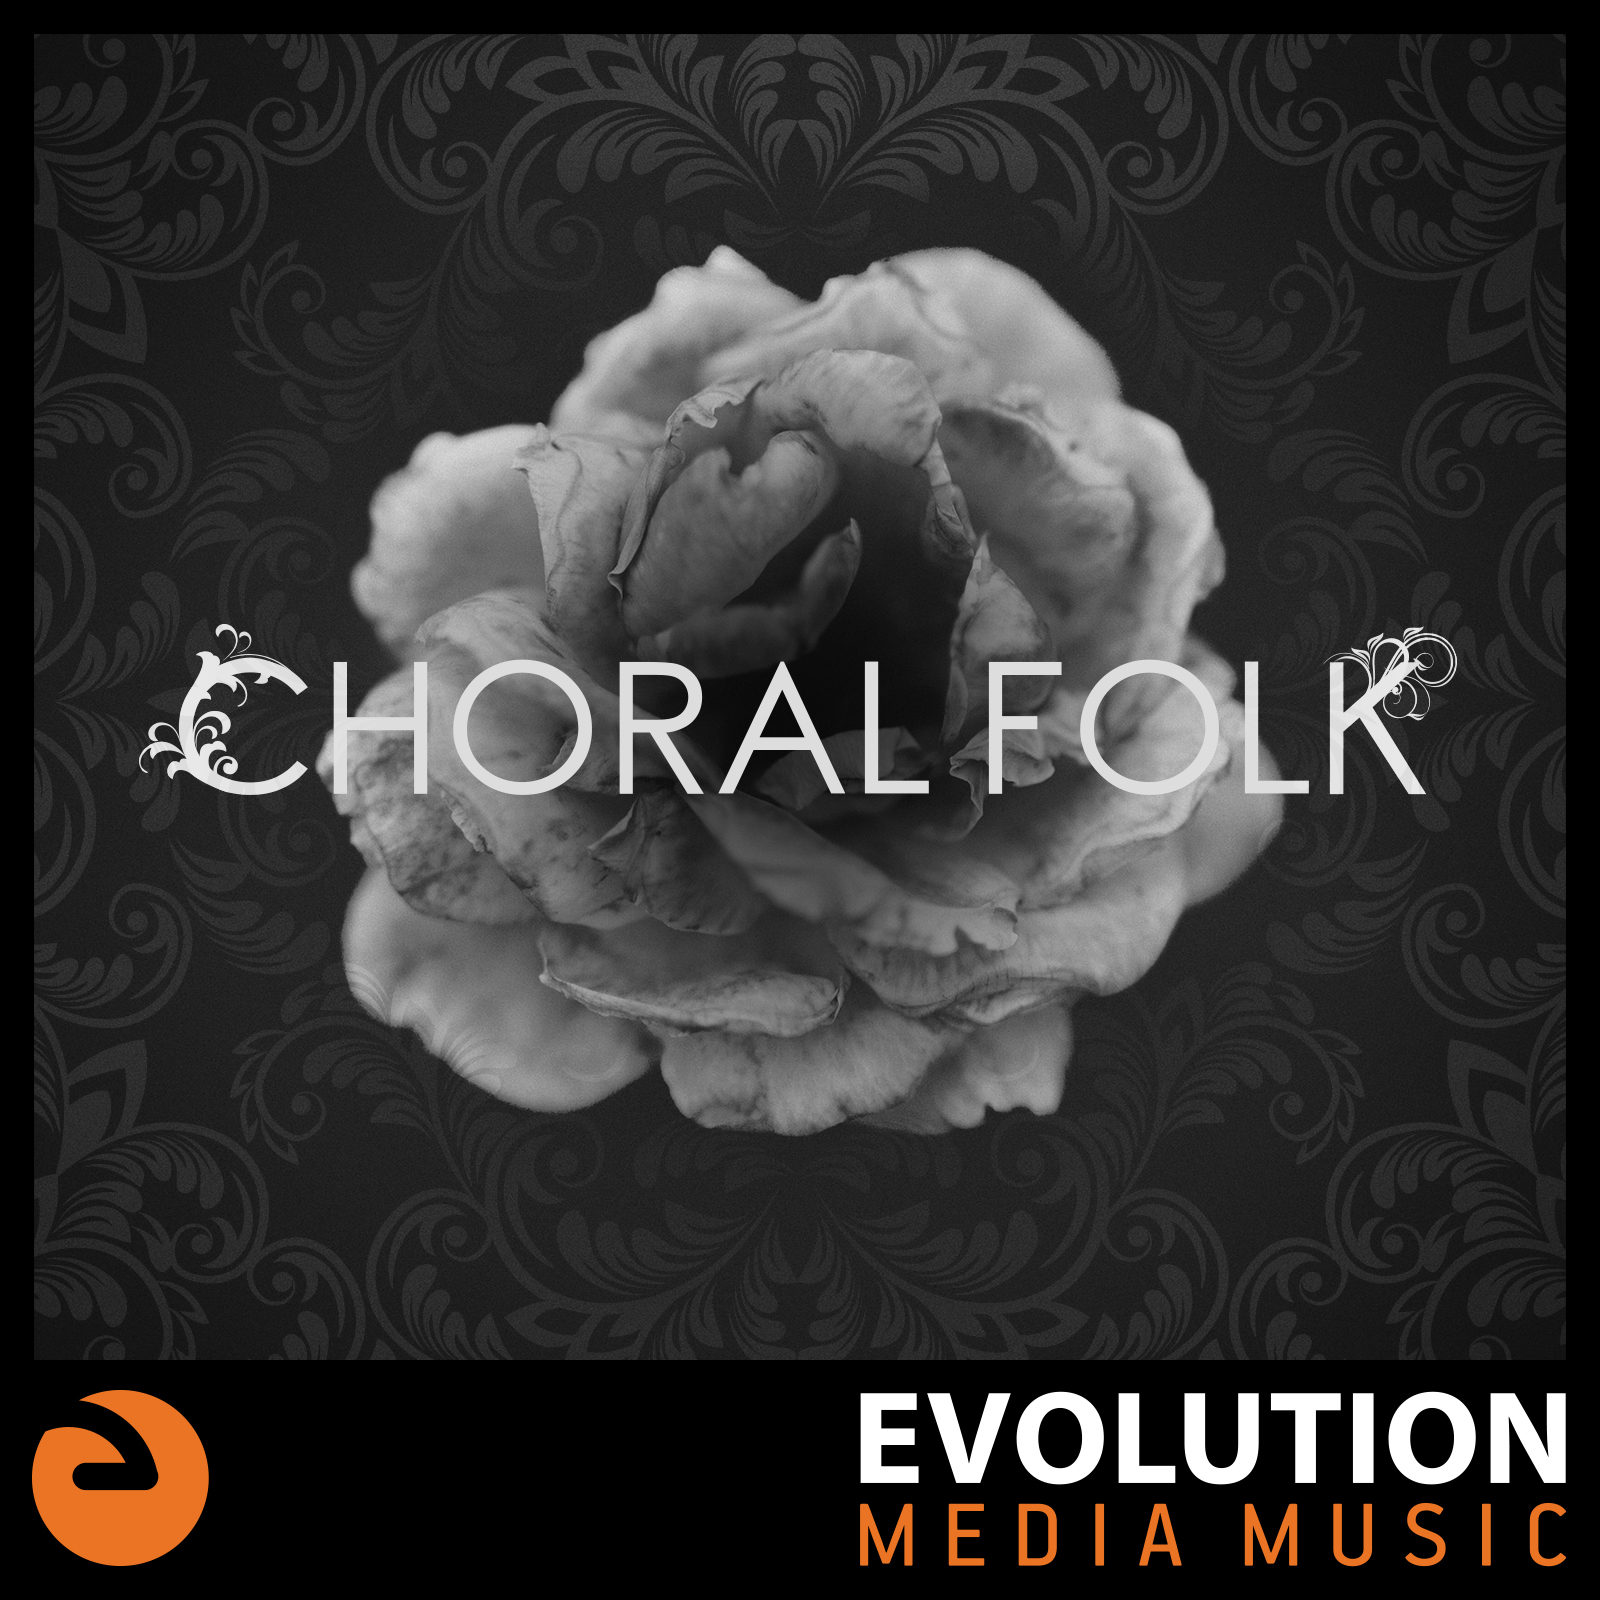 Choral Folk